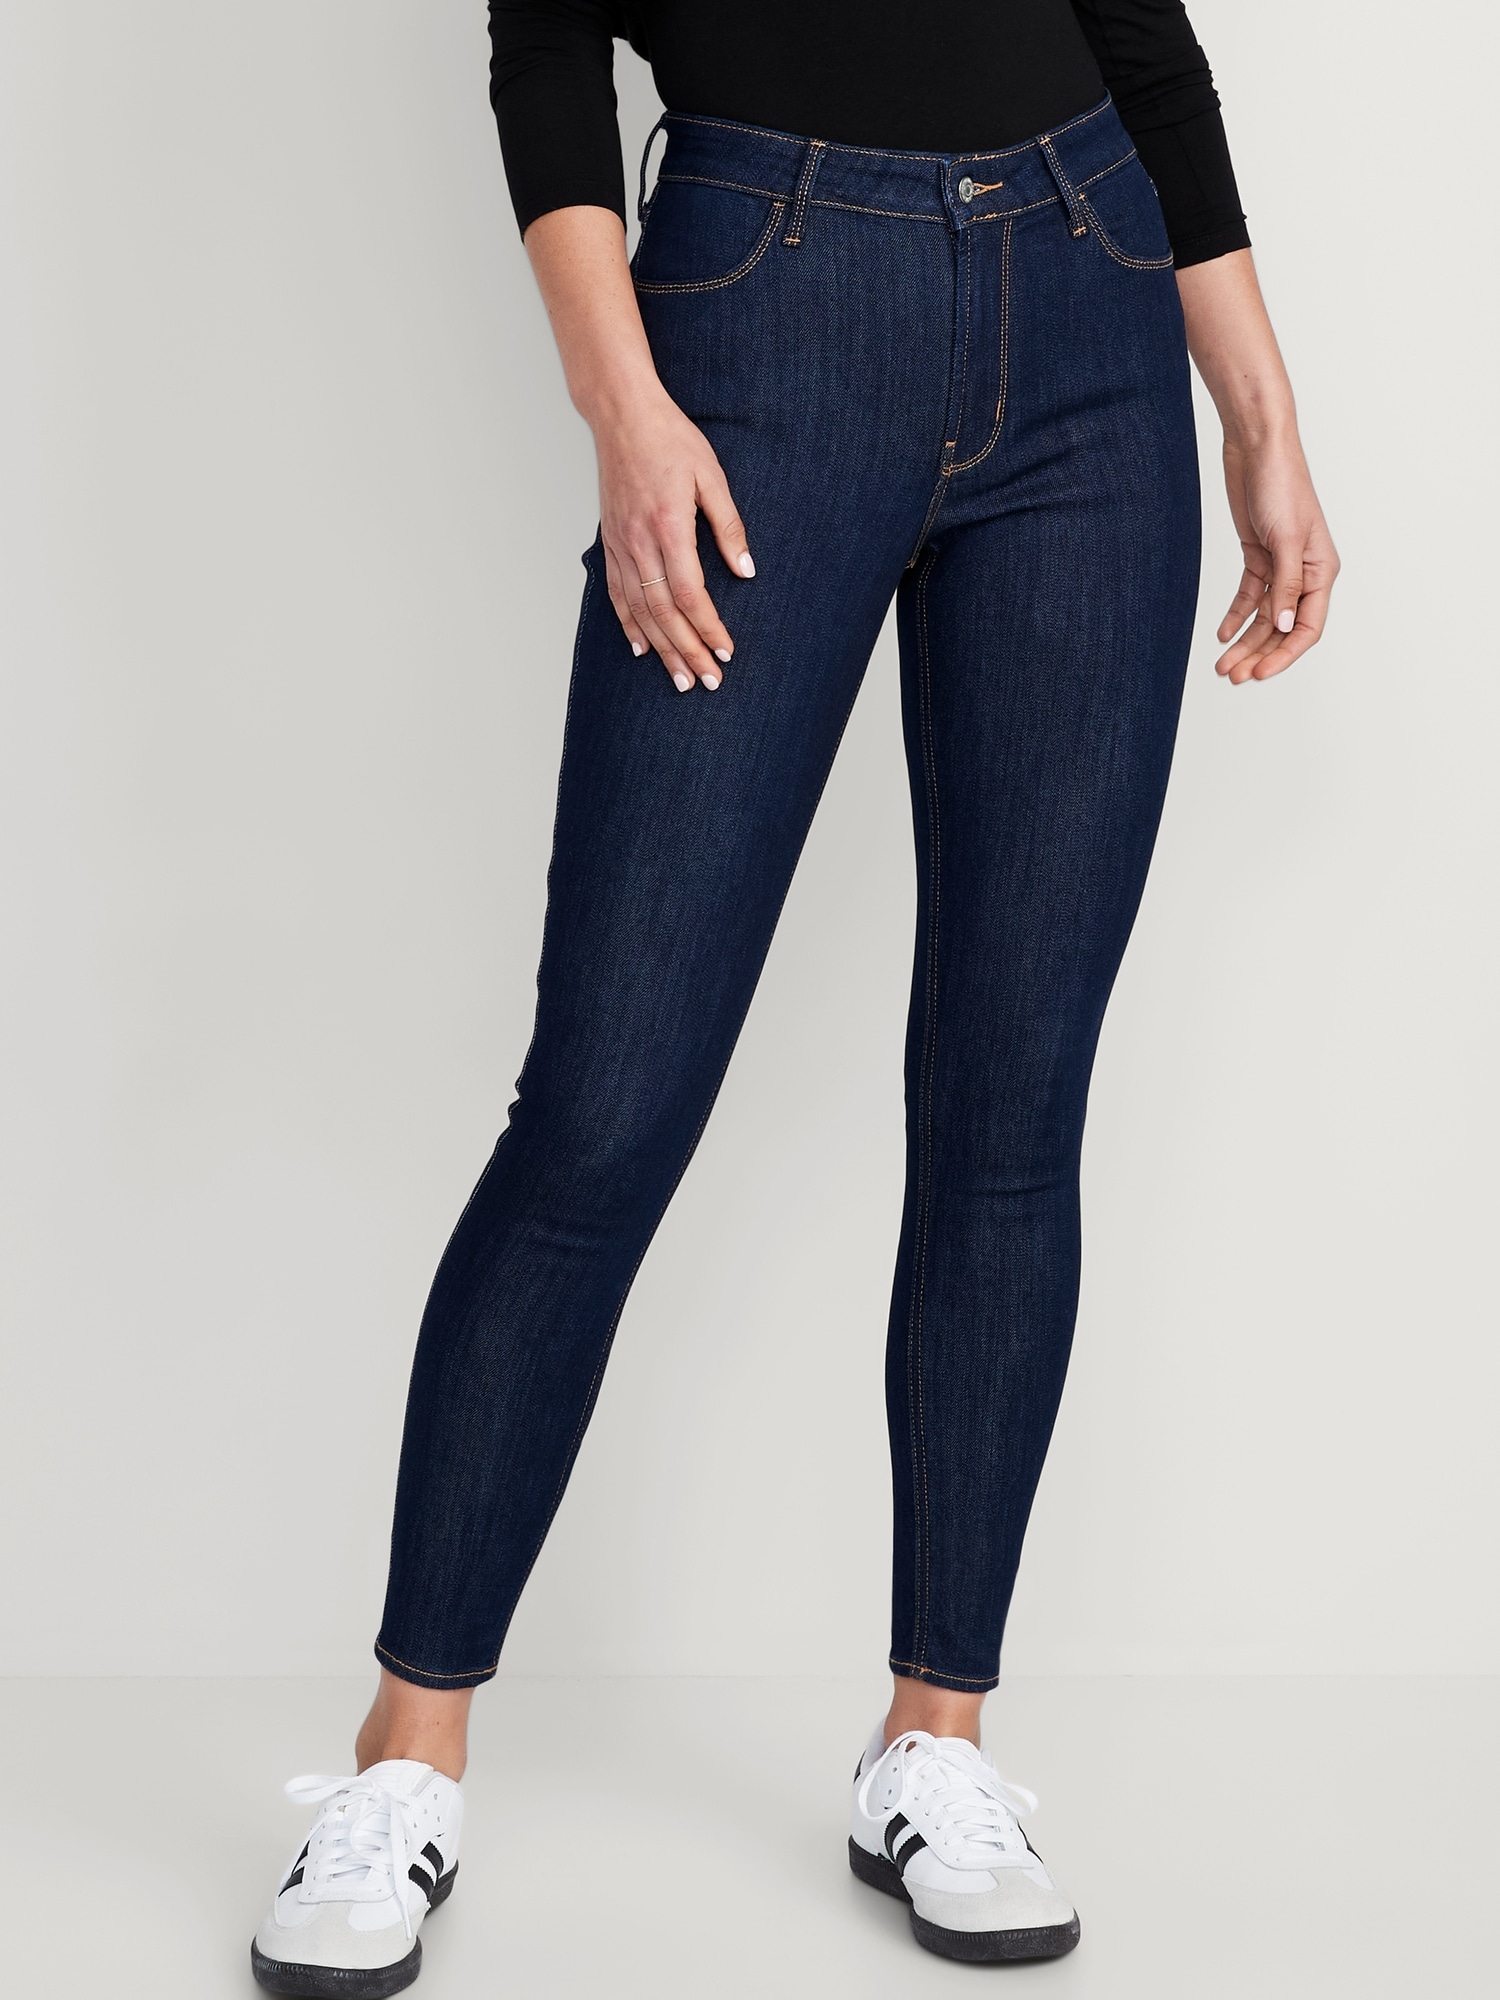 Women's Elastic Waist Skinny Jeans